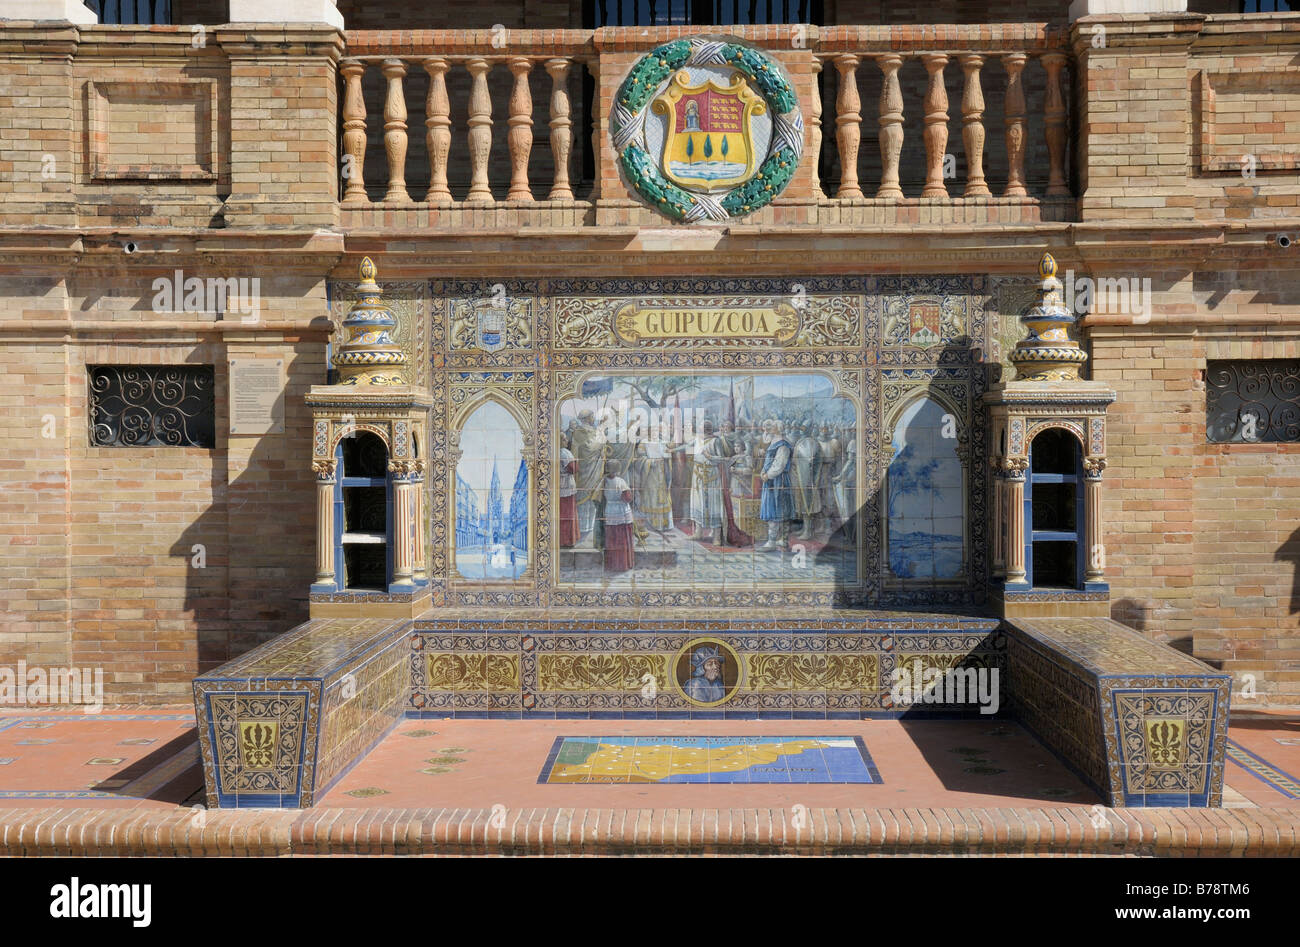 Azulejo, mosaic in the tiles, of Guipuzcoa, Plaza de Espana, Andalusia, Spain, Europe Stock Photo